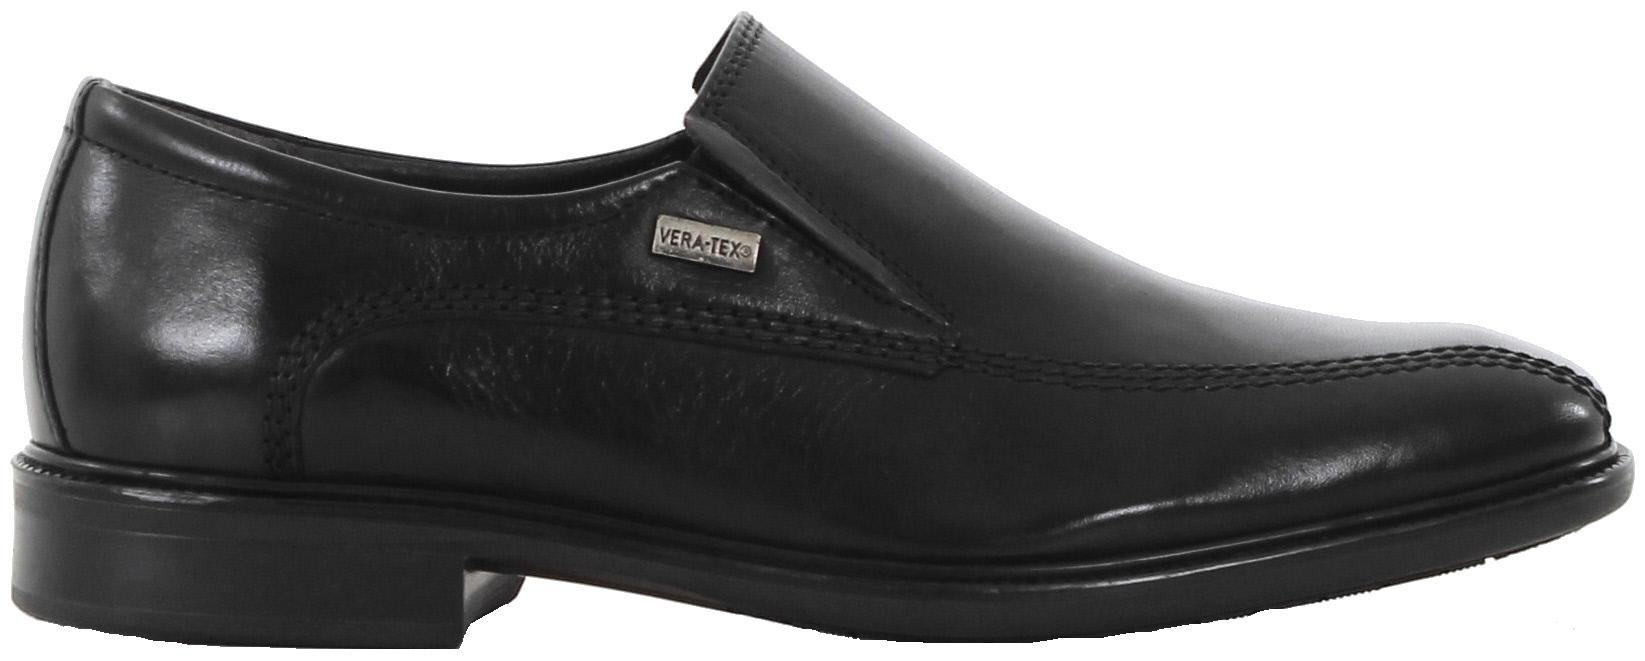 Senator Walking shoes 479-4787 black - Stilettoshop.eu webstore